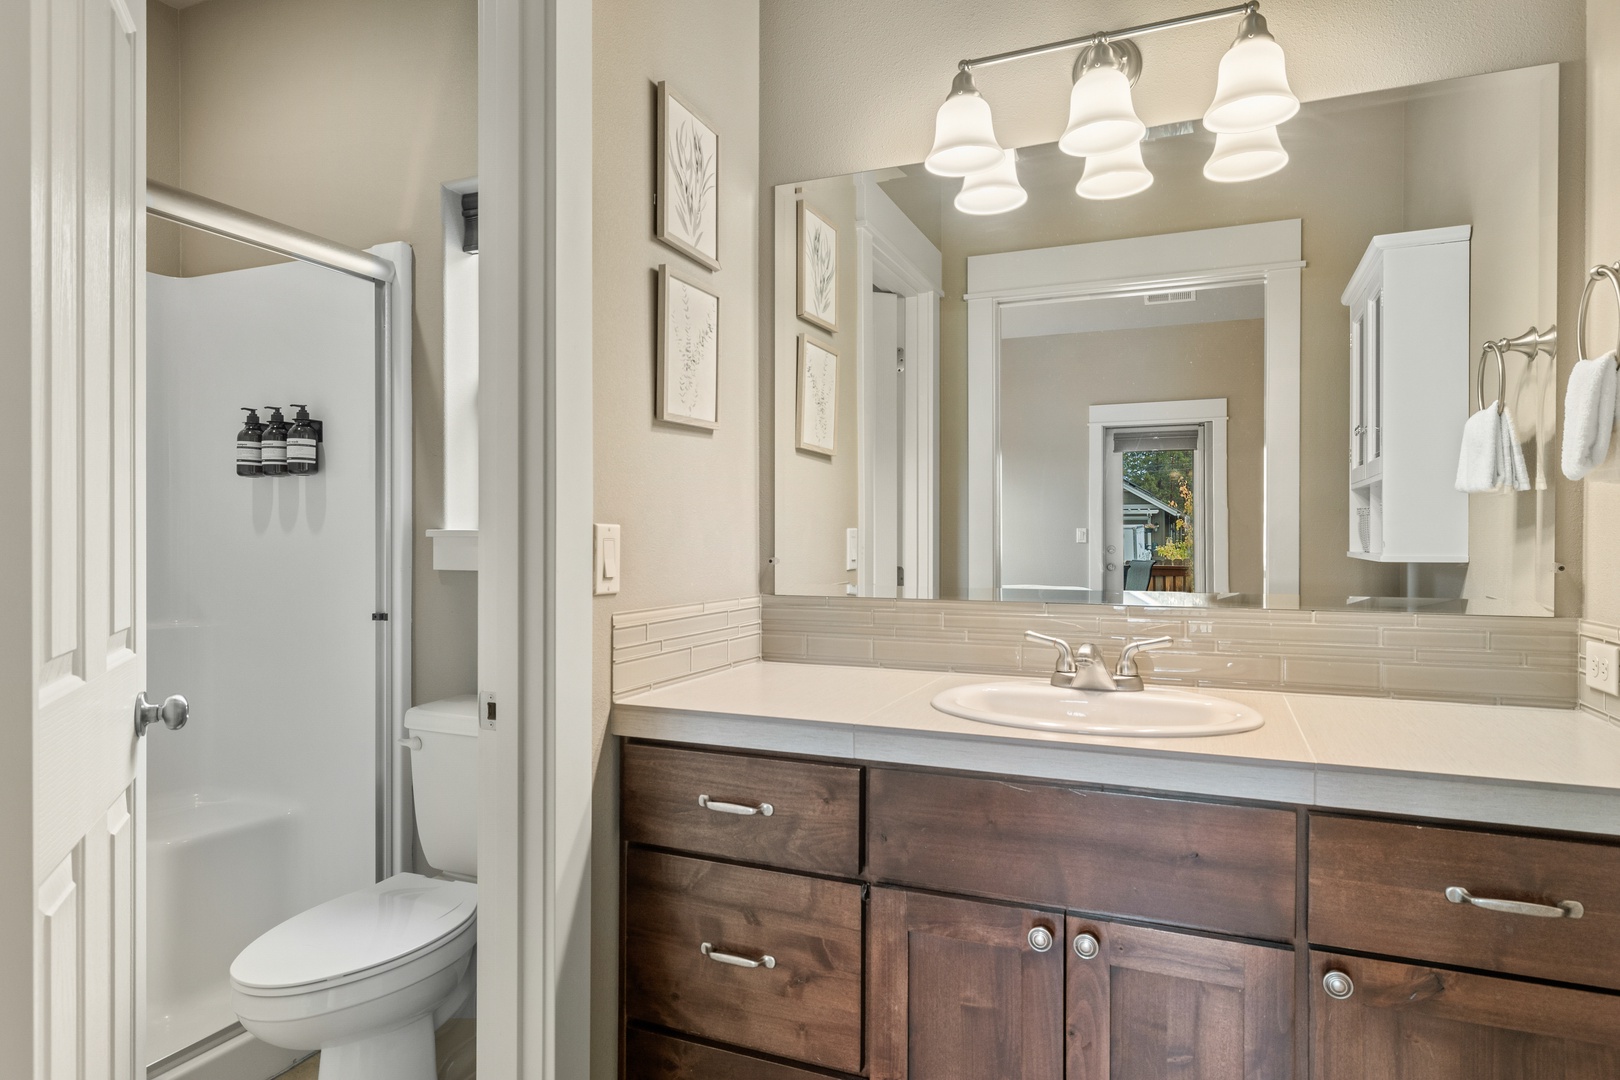 The master en suite includes an oversized single vanity & walk-in shower